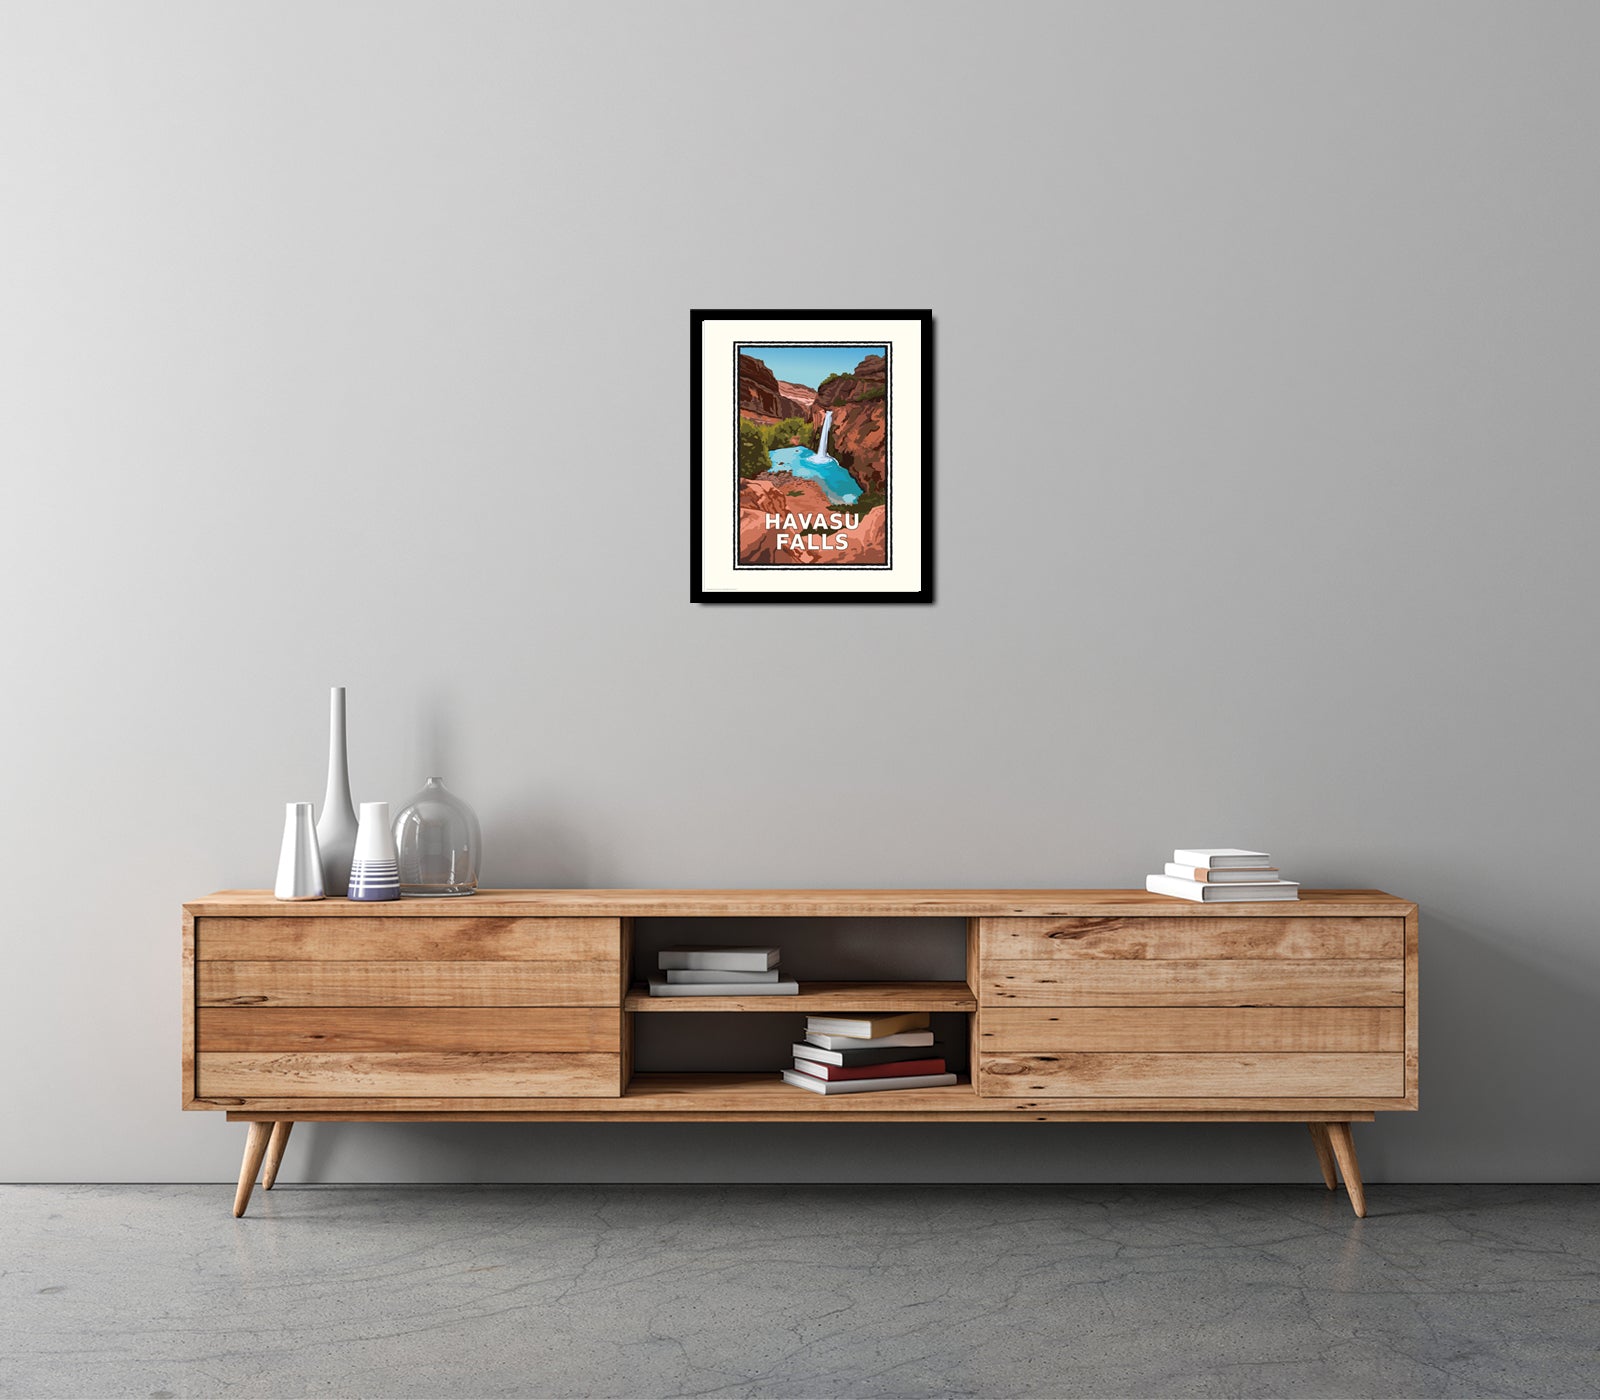 Landmark AZ | Havasu Falls Art Print